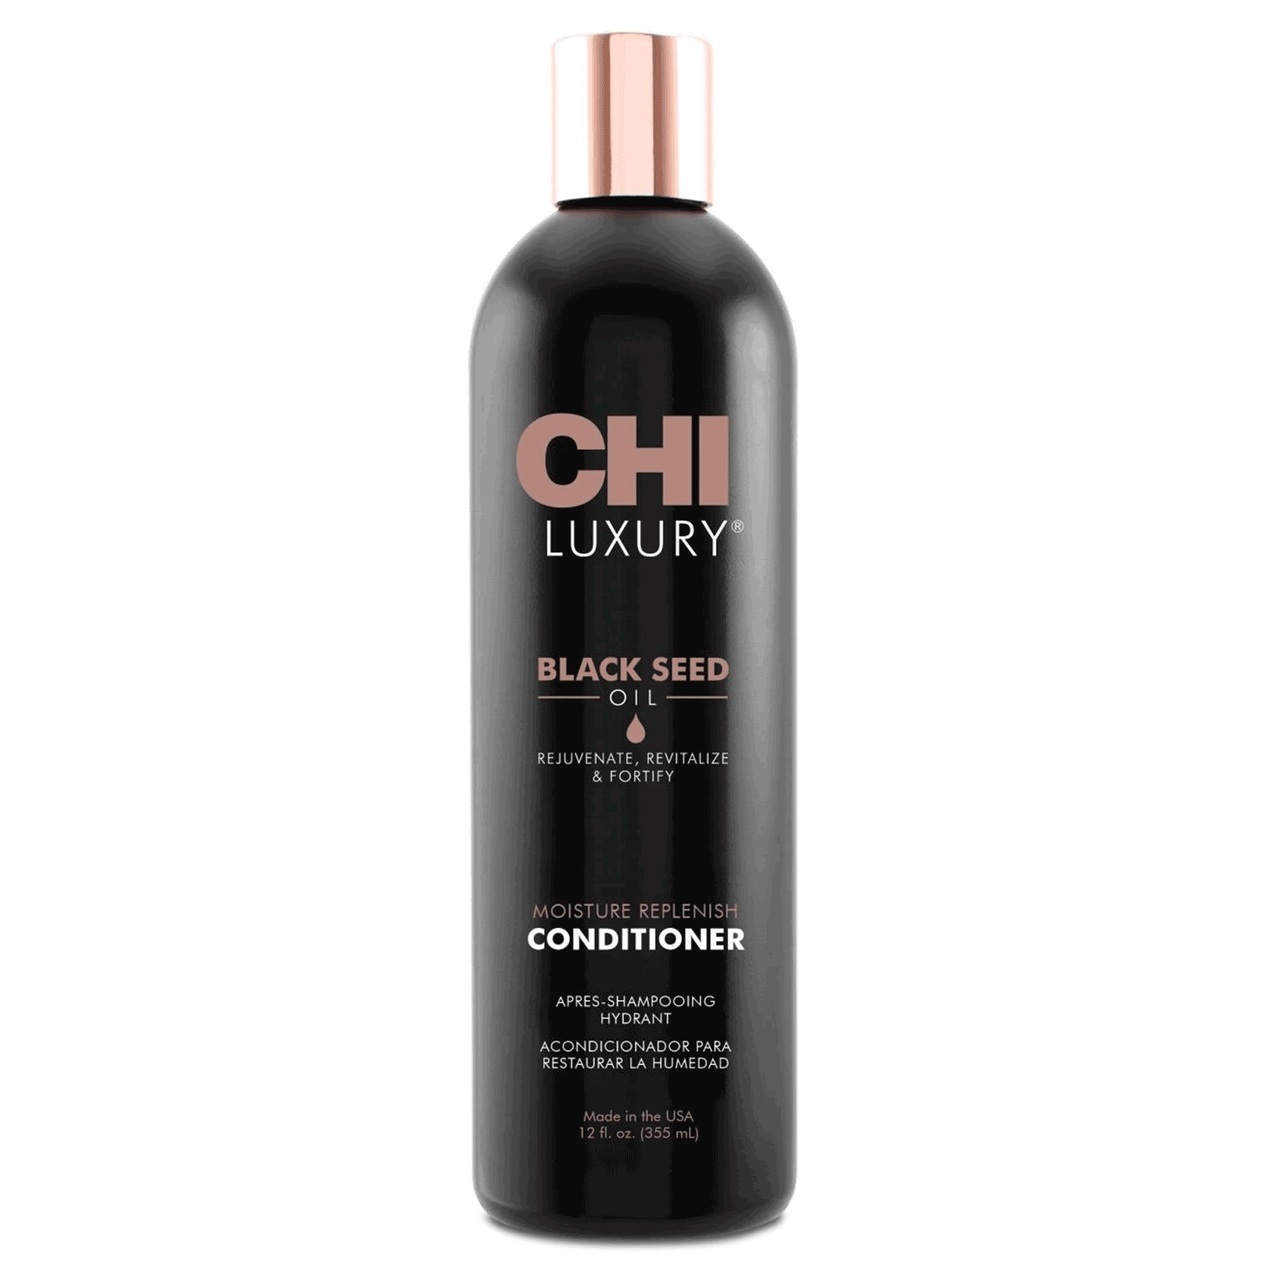 CHI Luxury Black Seed Moisture Replenish Conditioner 12oz - $25.96